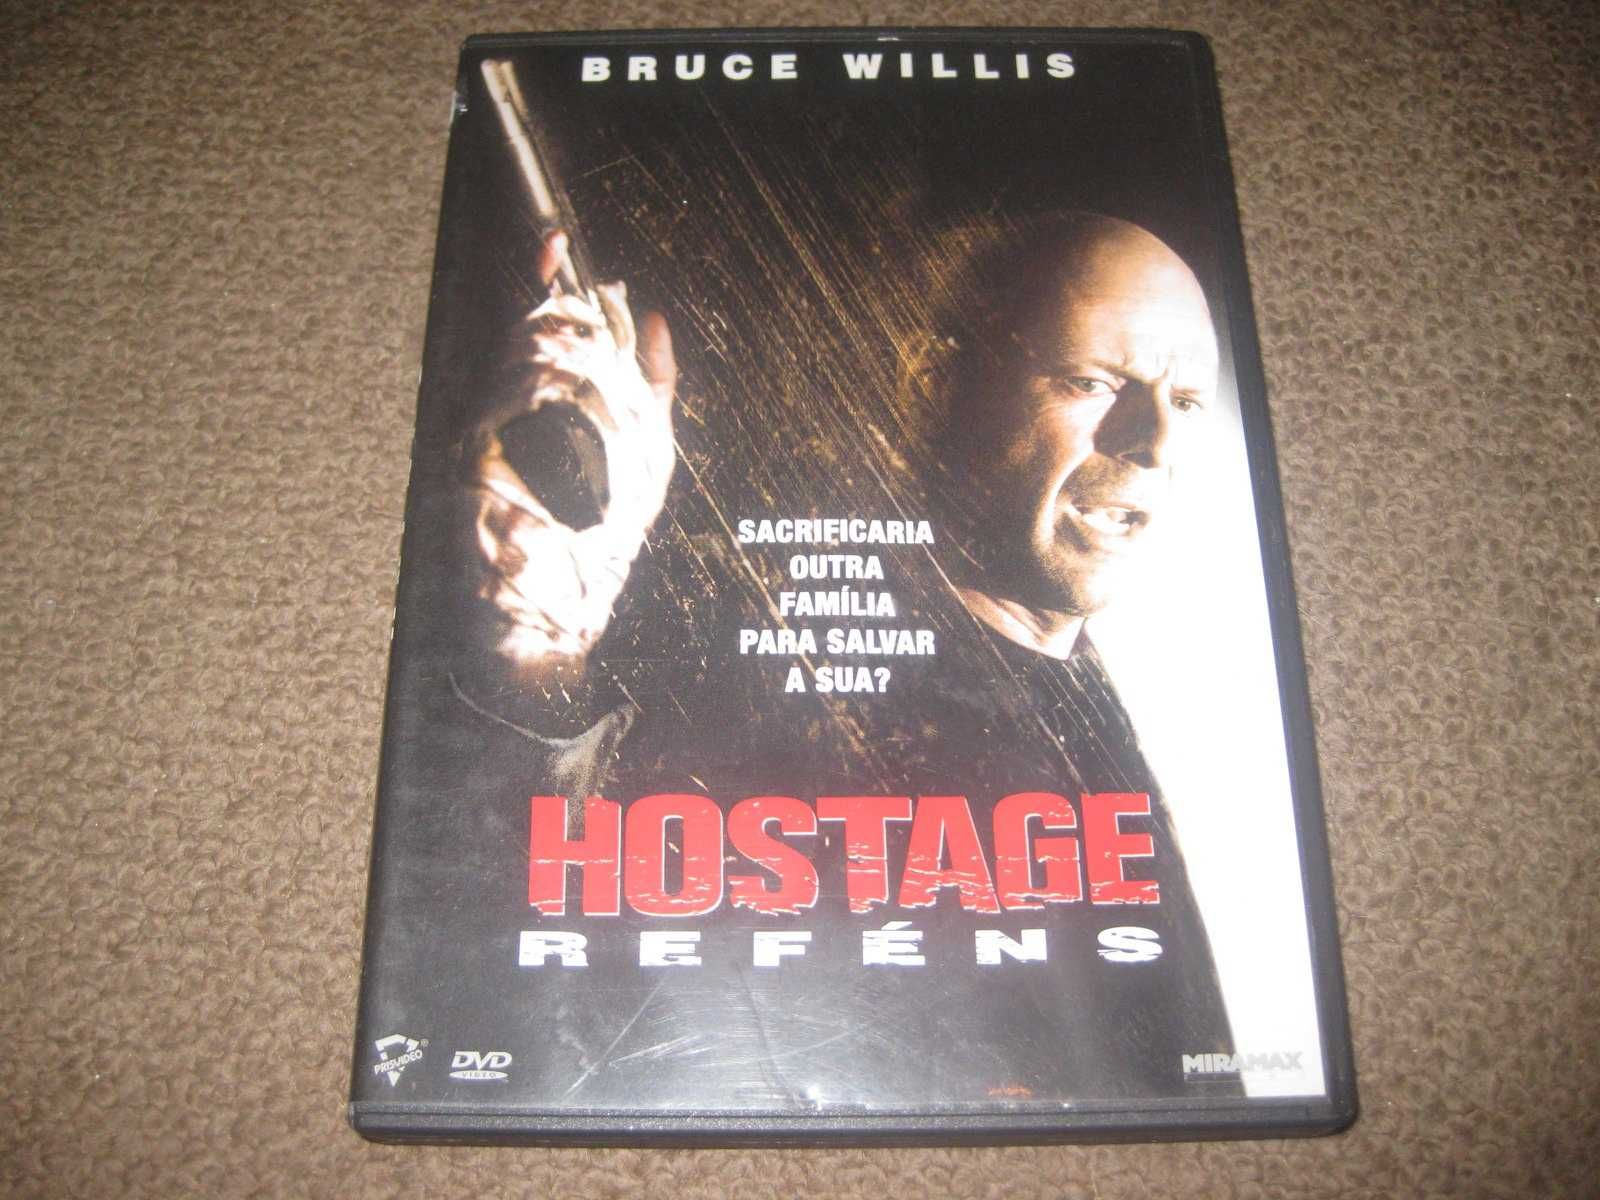 DVD "Hostage- Reféns" com Bruce Willis